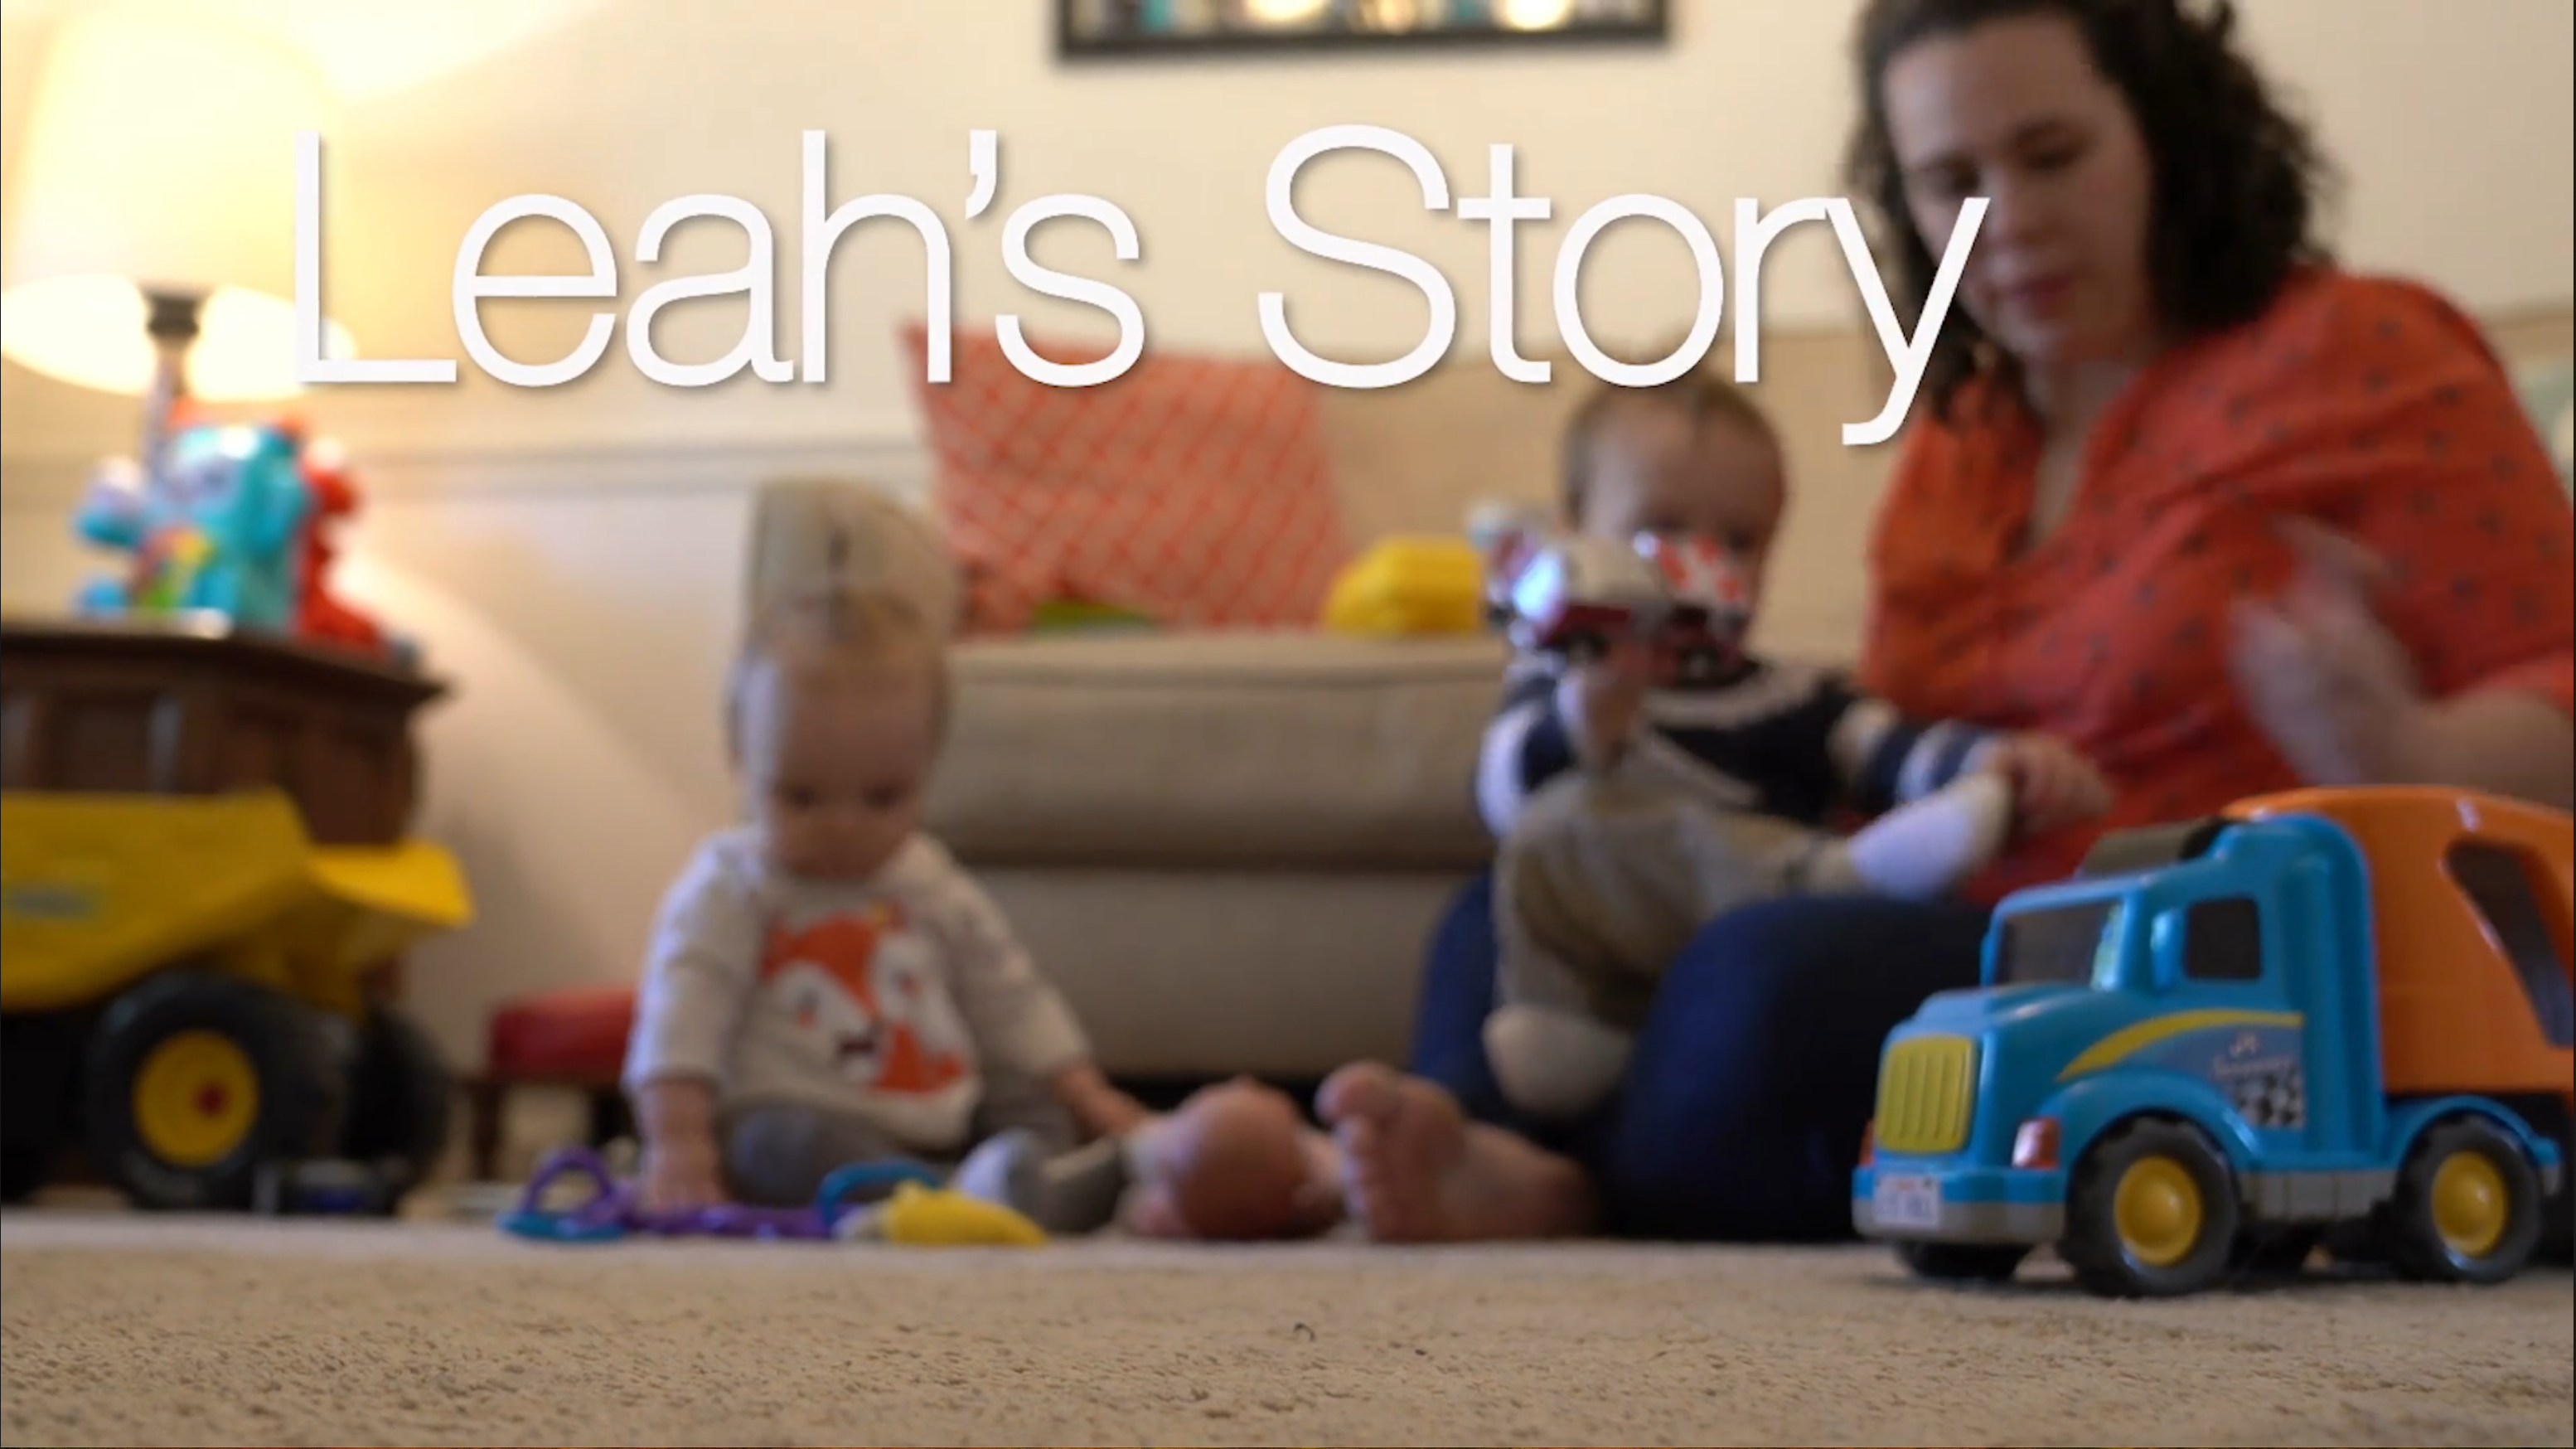 Leah's Story